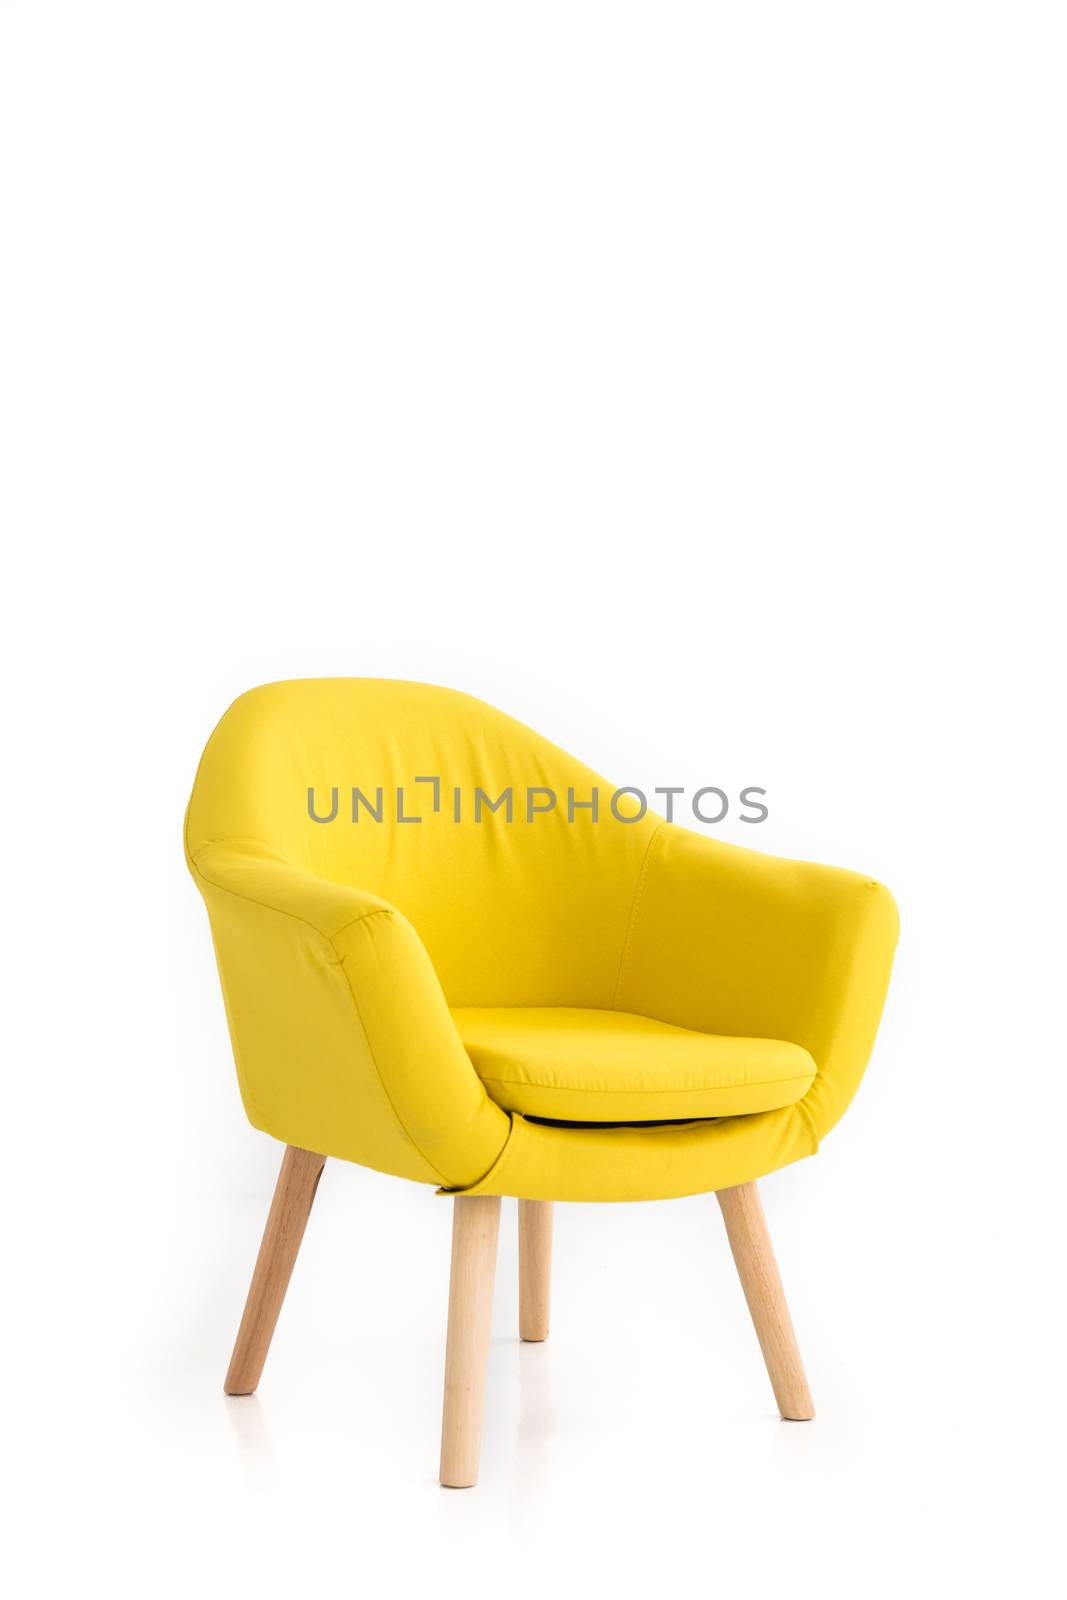 modern armchair on white background